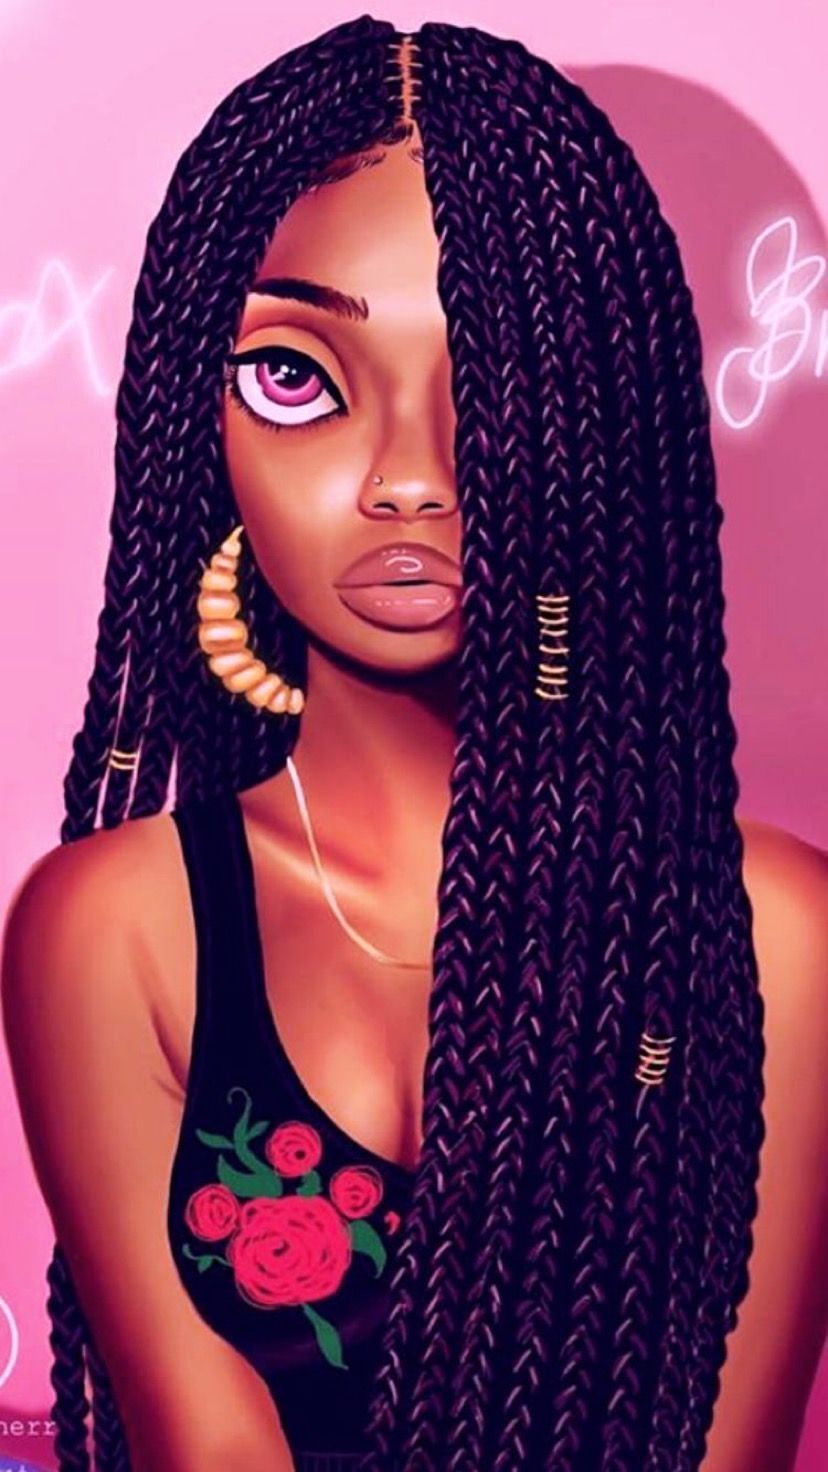 Art. How to draw braids, Black girl cartoon